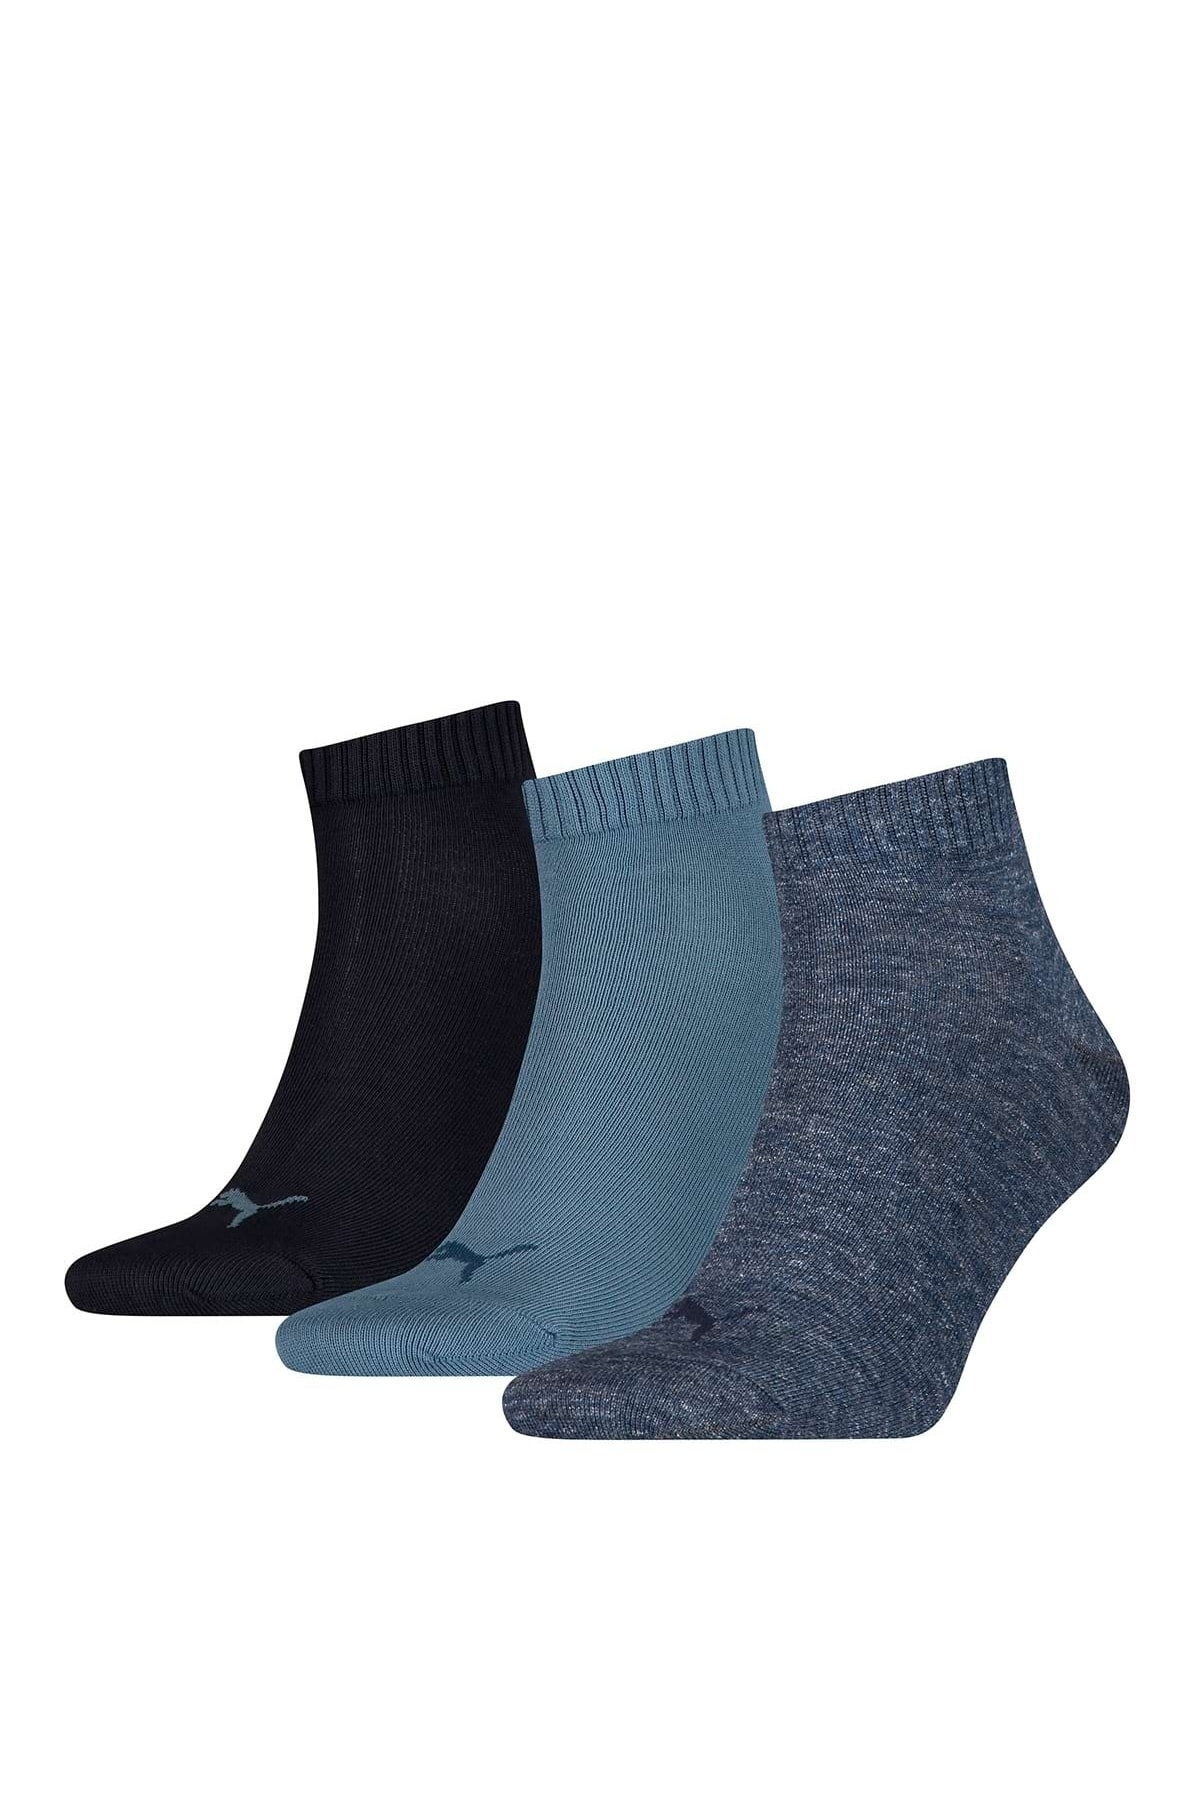 Puma Socken Blau 3er-Pack